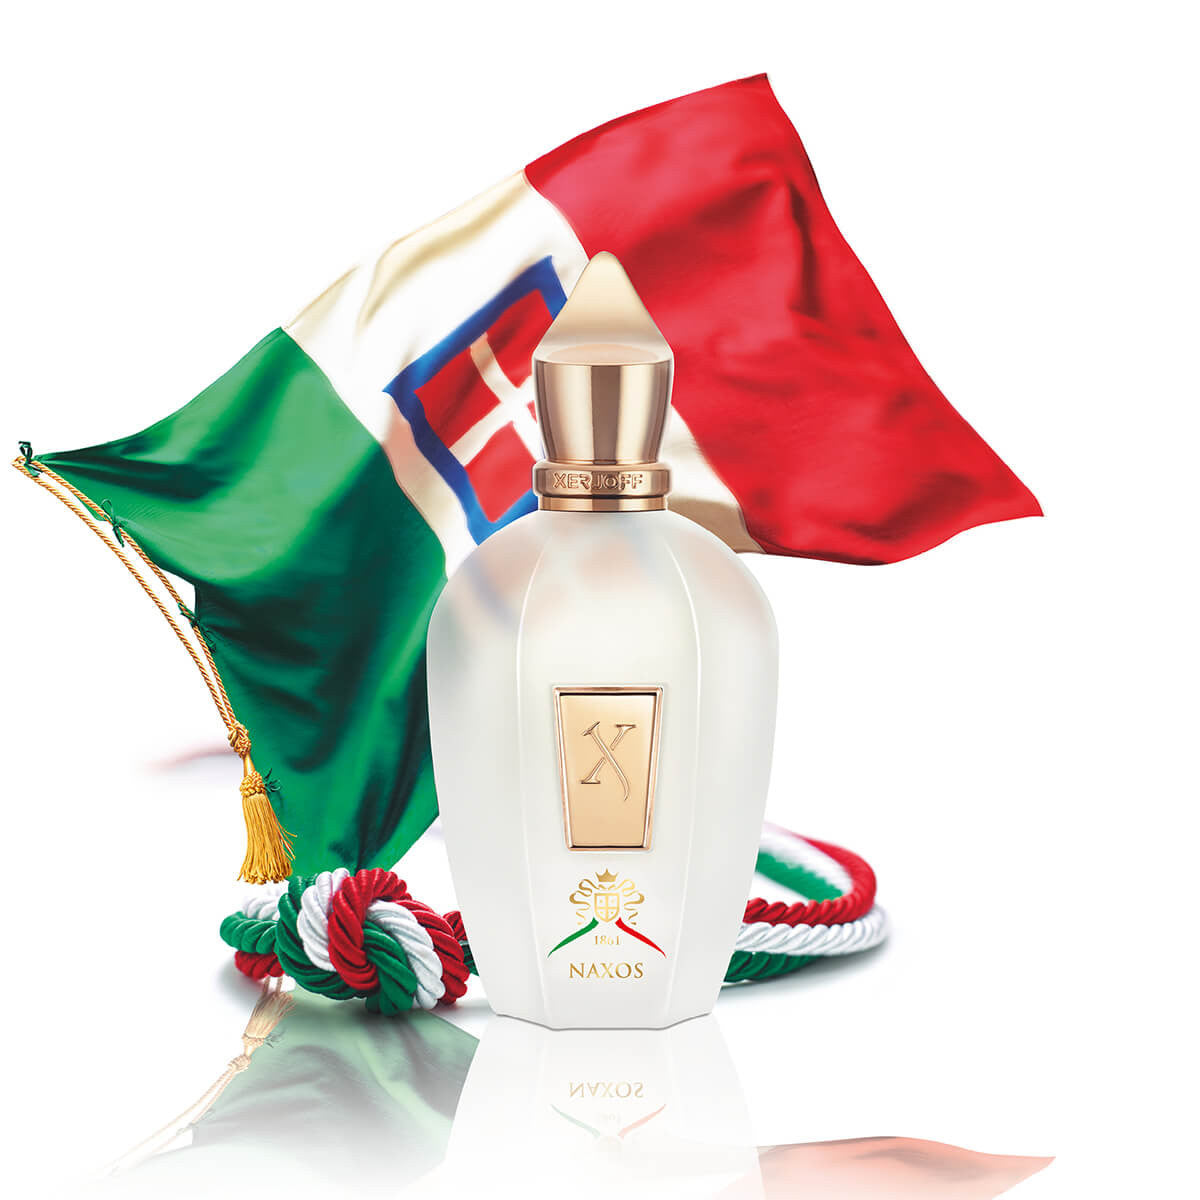 Xerjoff Naxos | Naxos 1861 Perfume | Fragrance Samples| Perfume samples